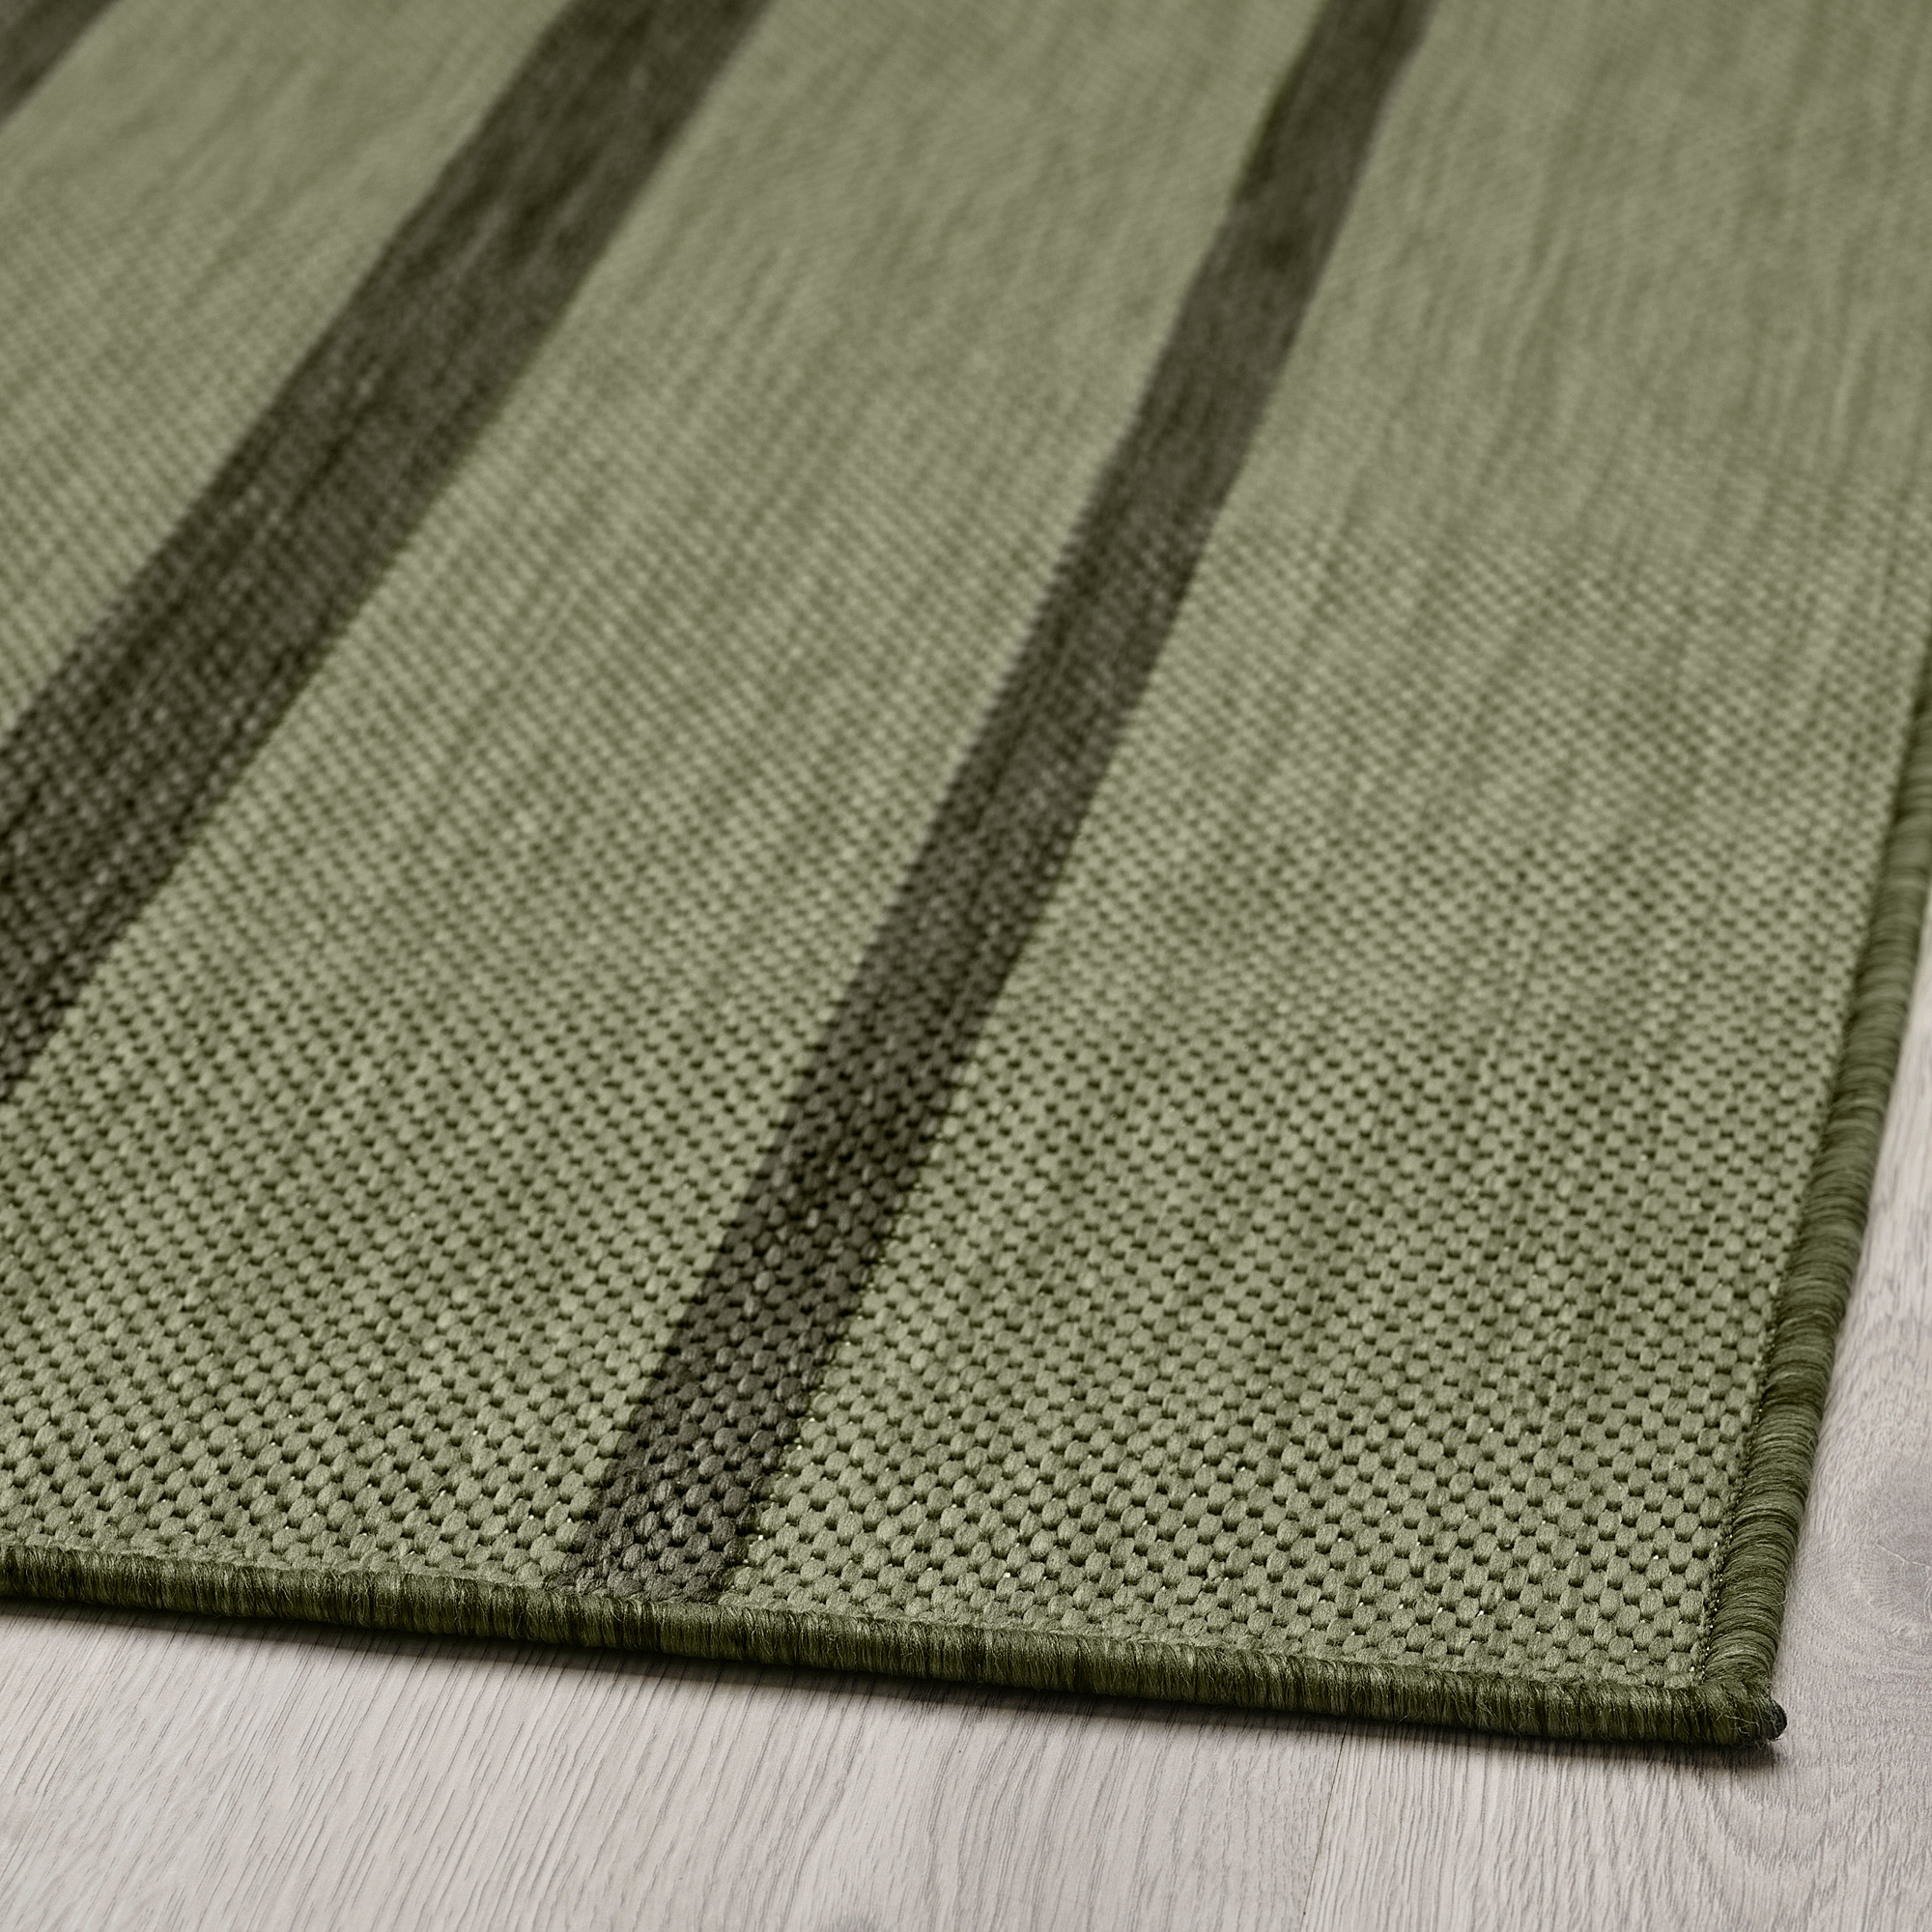 KANTSTOLPE 平織地毯 室內/戶外用